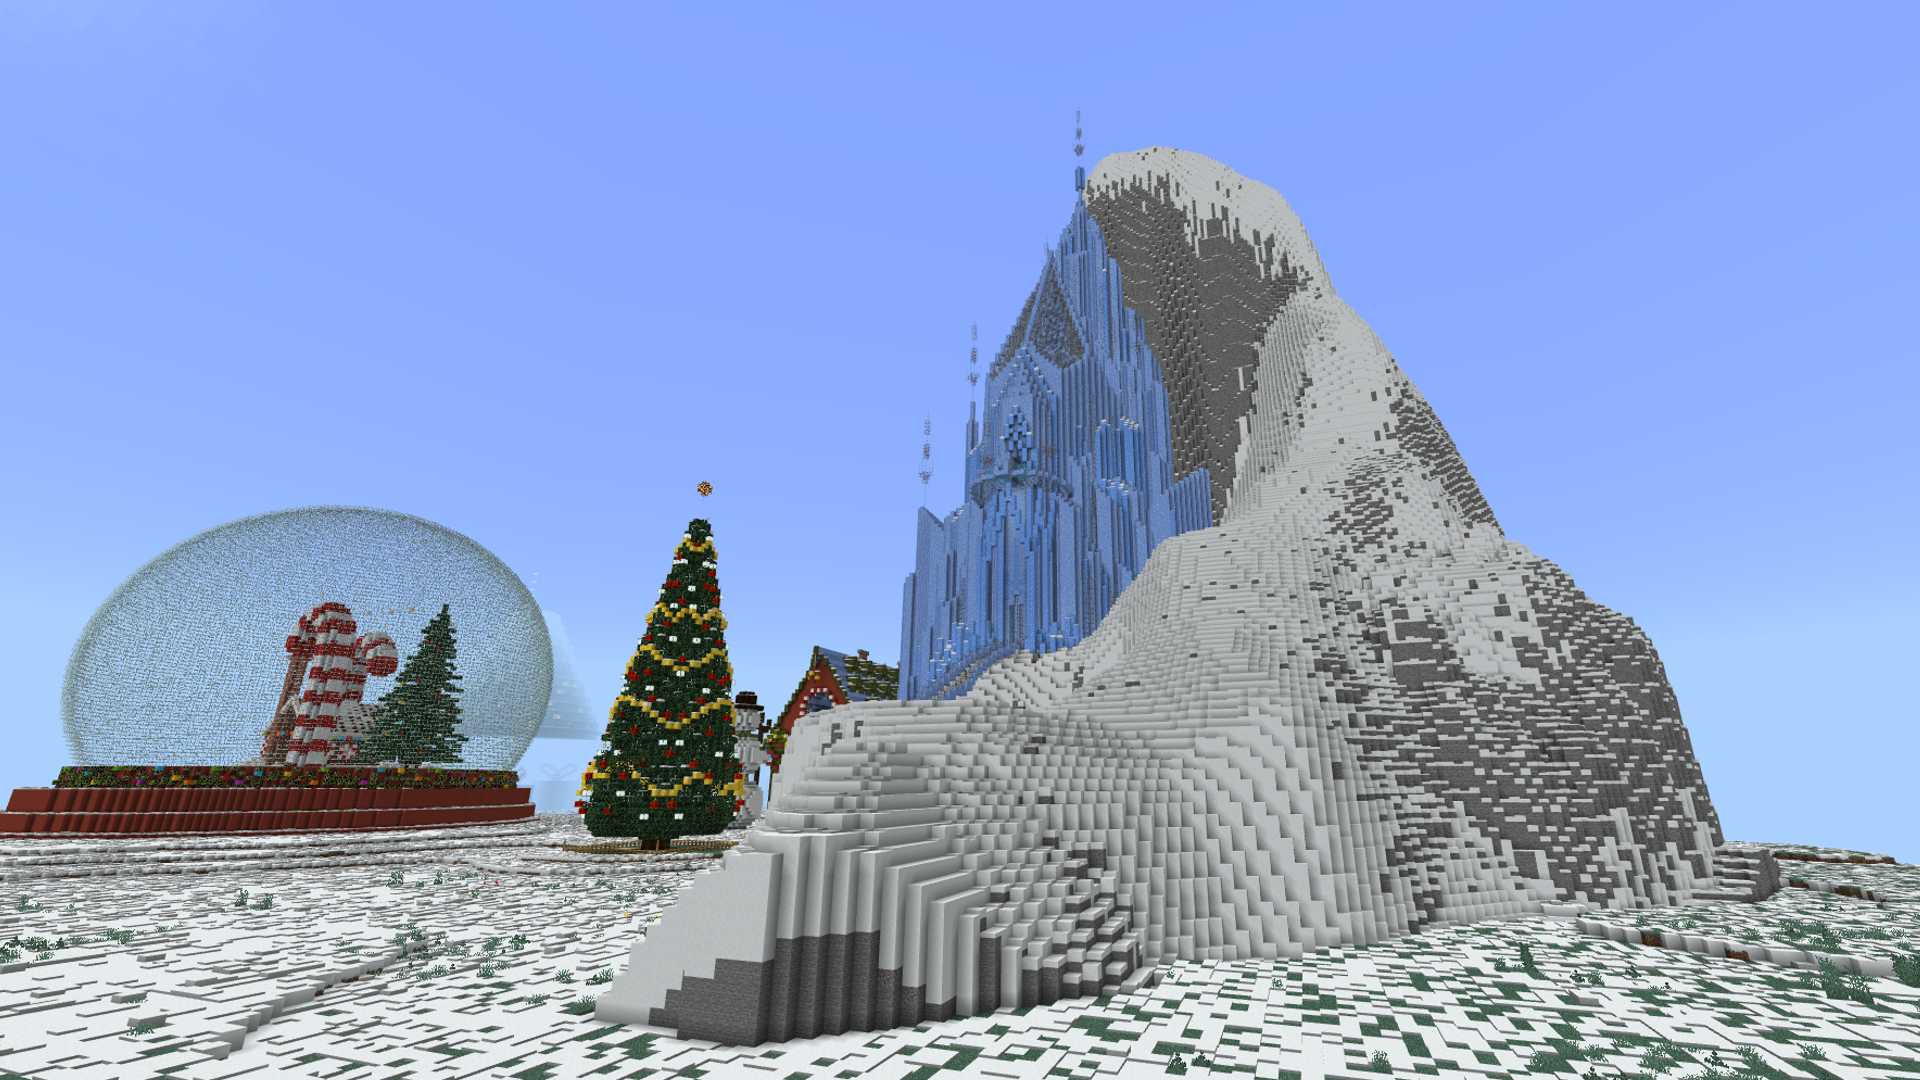 Minecraft Christmas City Map